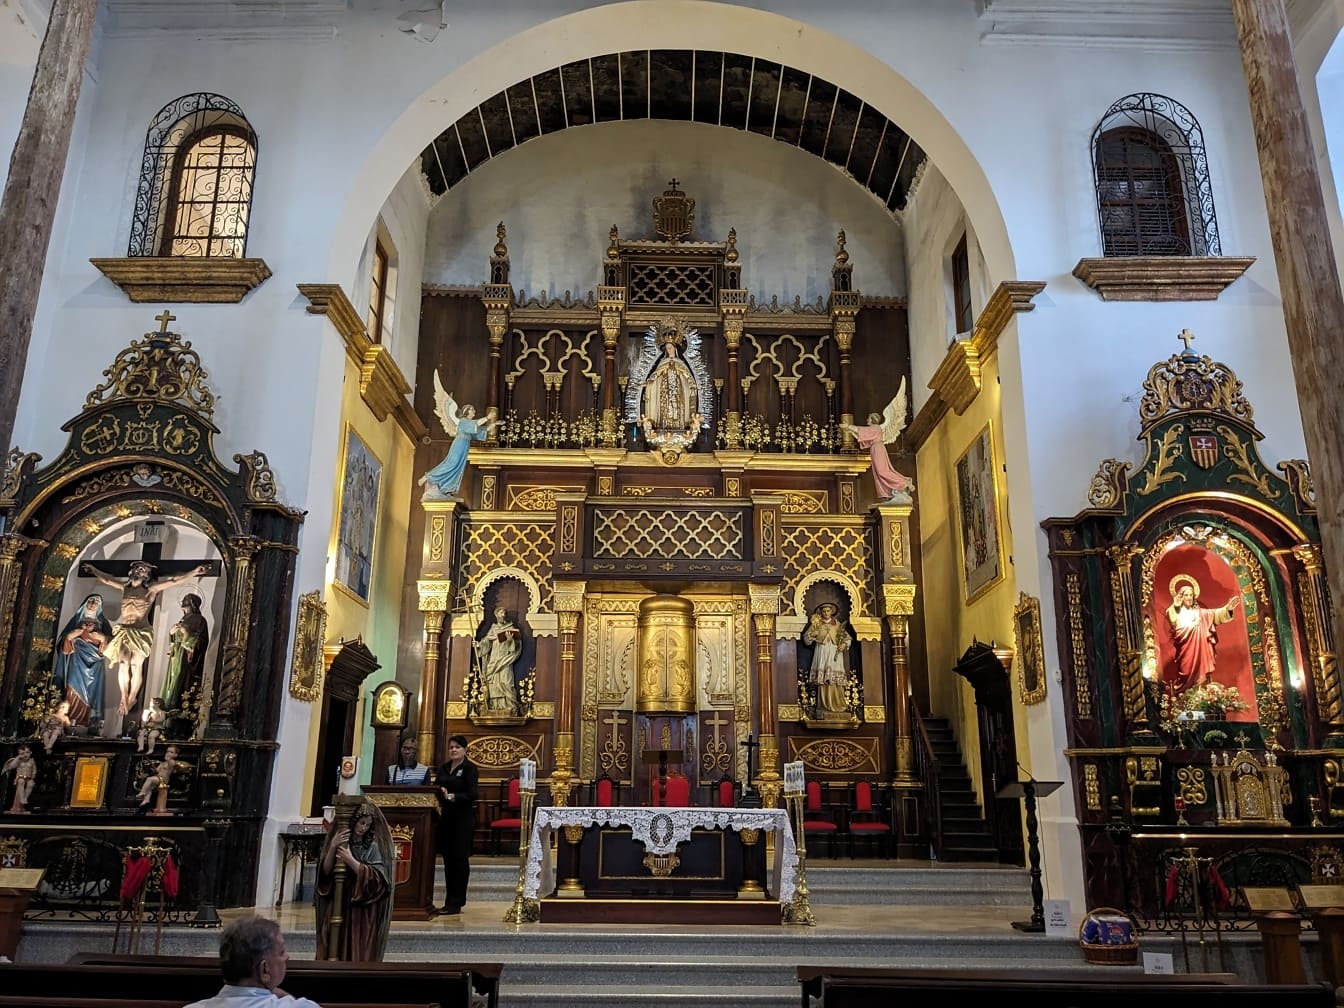 Unutrašnjost Katoličke crkve milosrđa s velikim oltarom